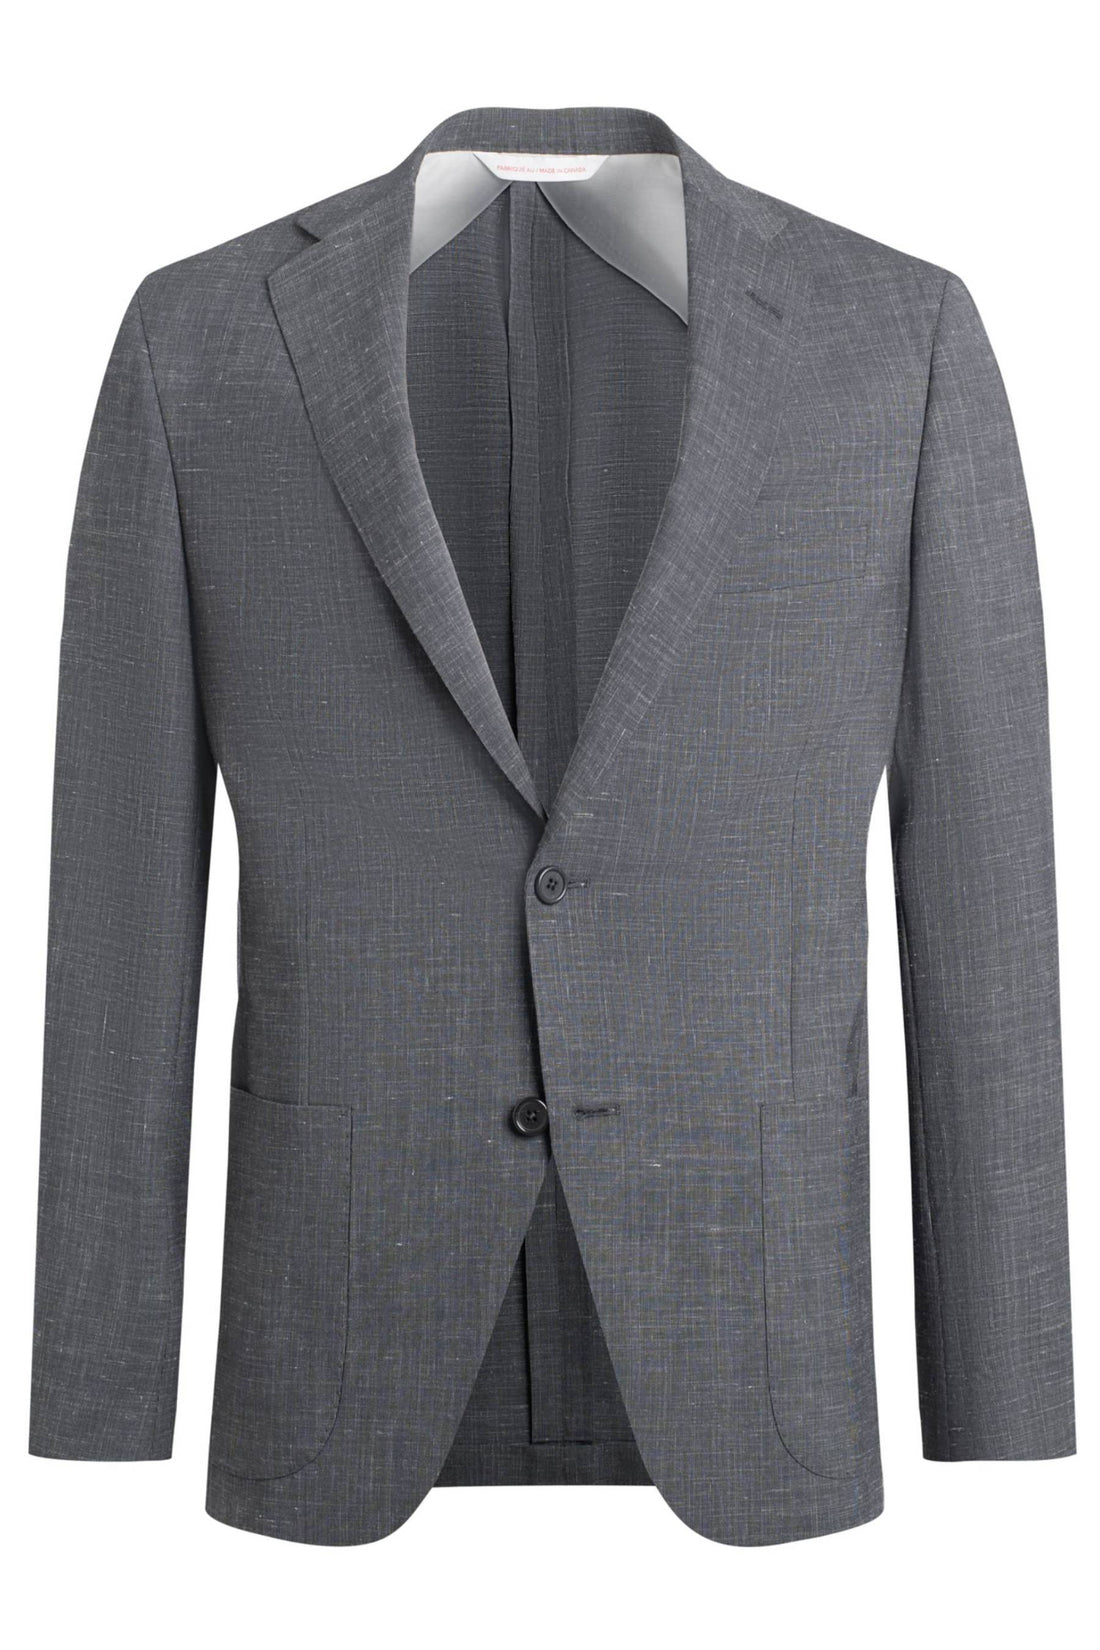 Samuelsohn Grey Wool Linen Stretch Suit Front Jacket